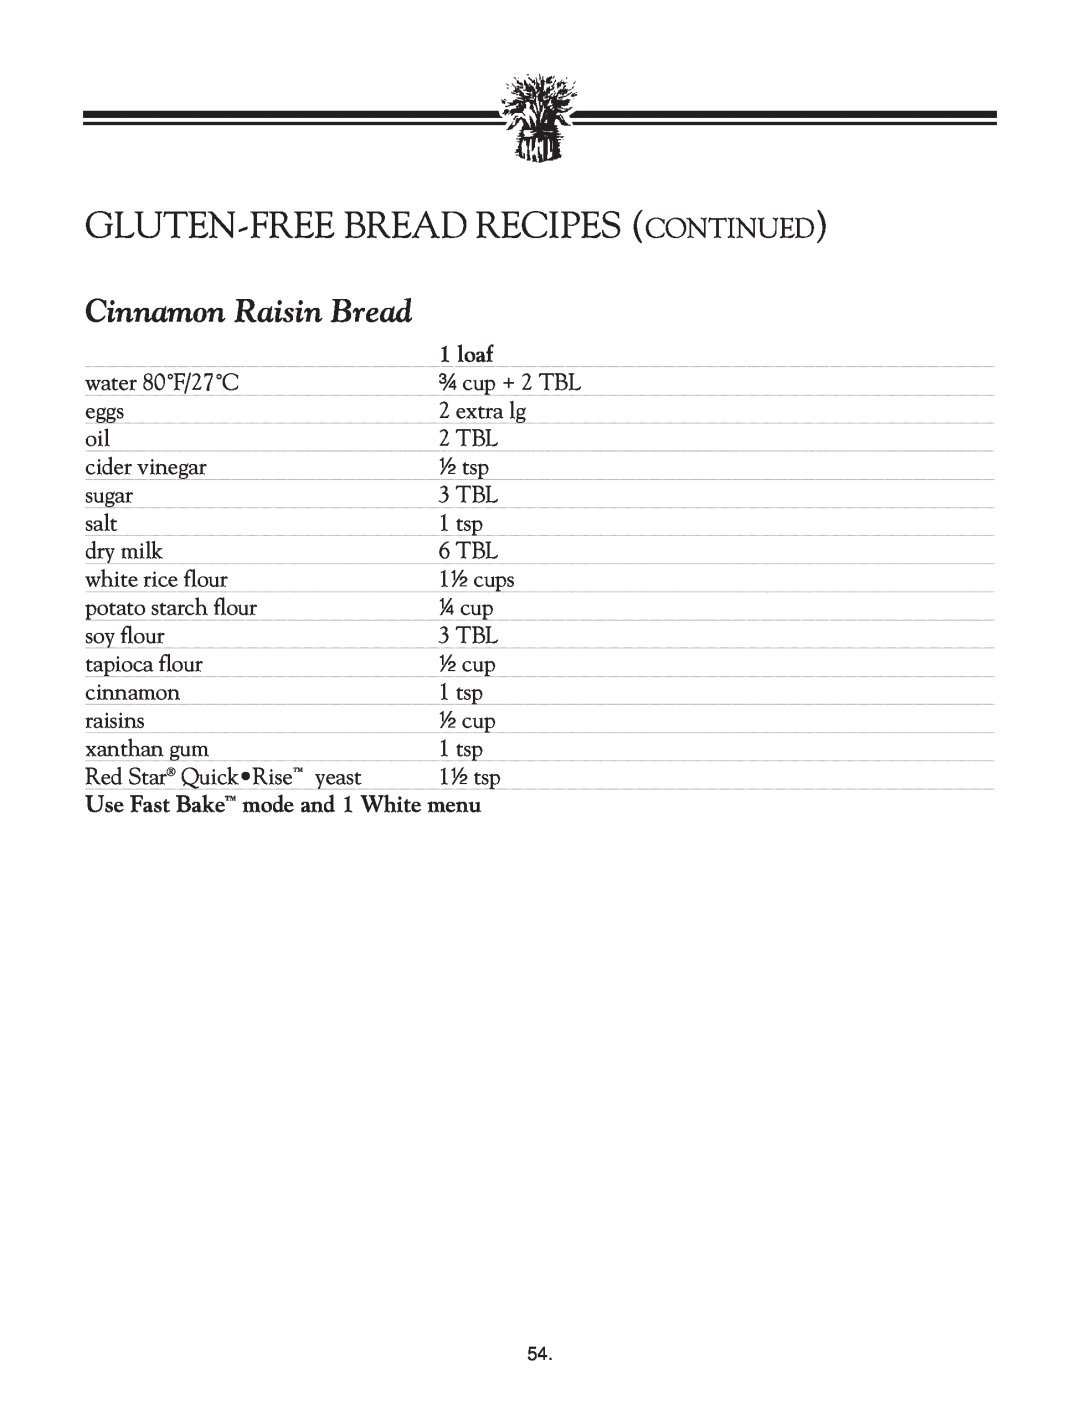 Breadman TR2828G instruction manual Gluten-Freebread Recipes Continued, Cinnamon Raisin Bread 